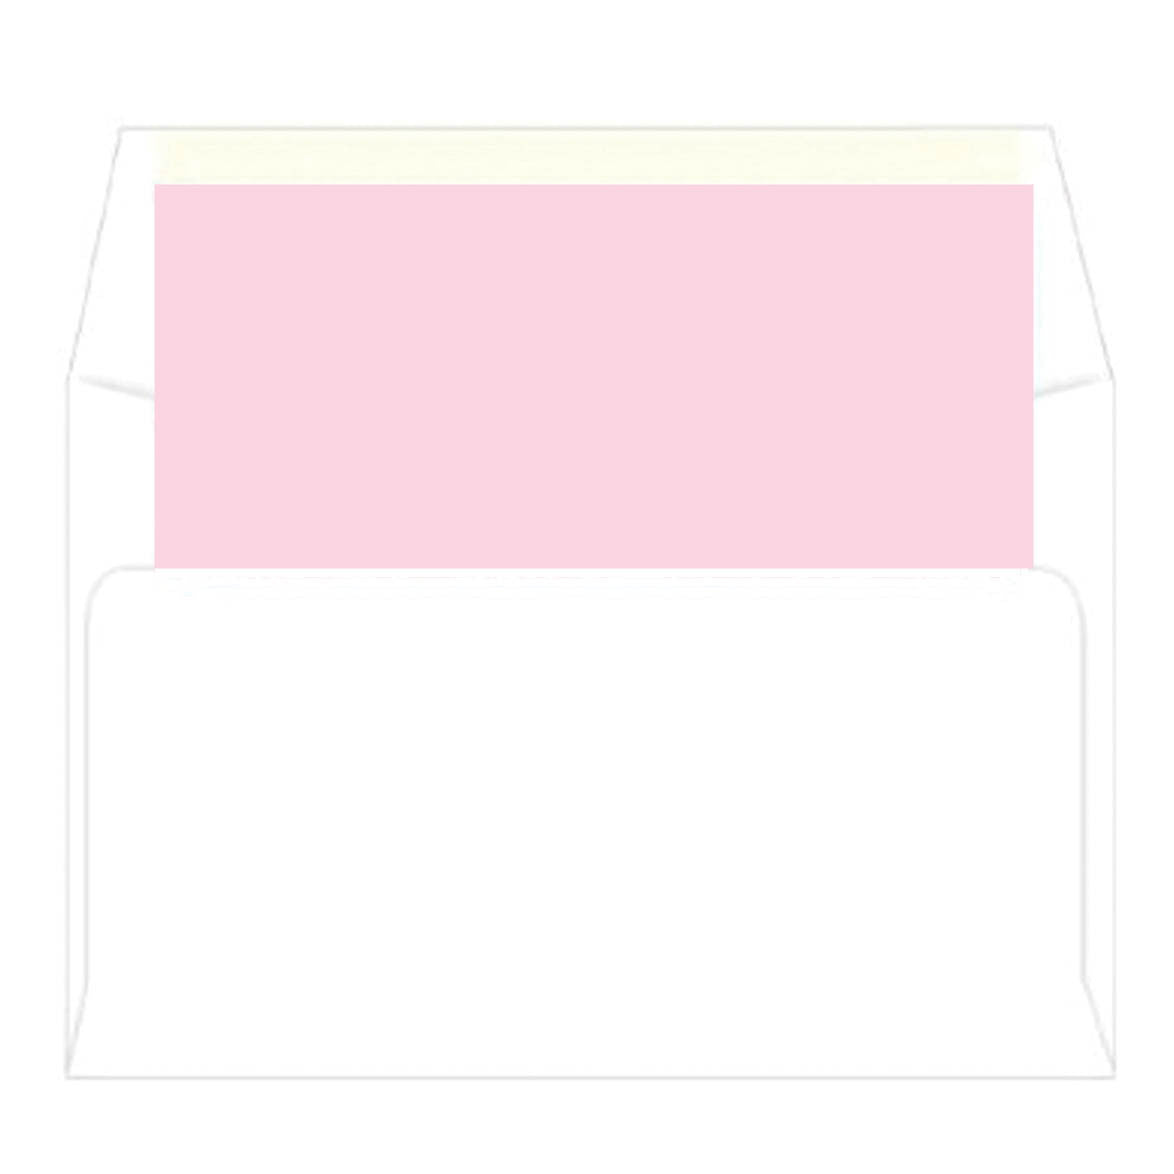 Pink + Green Greek Key Plaque Photo Birth Announcement Card